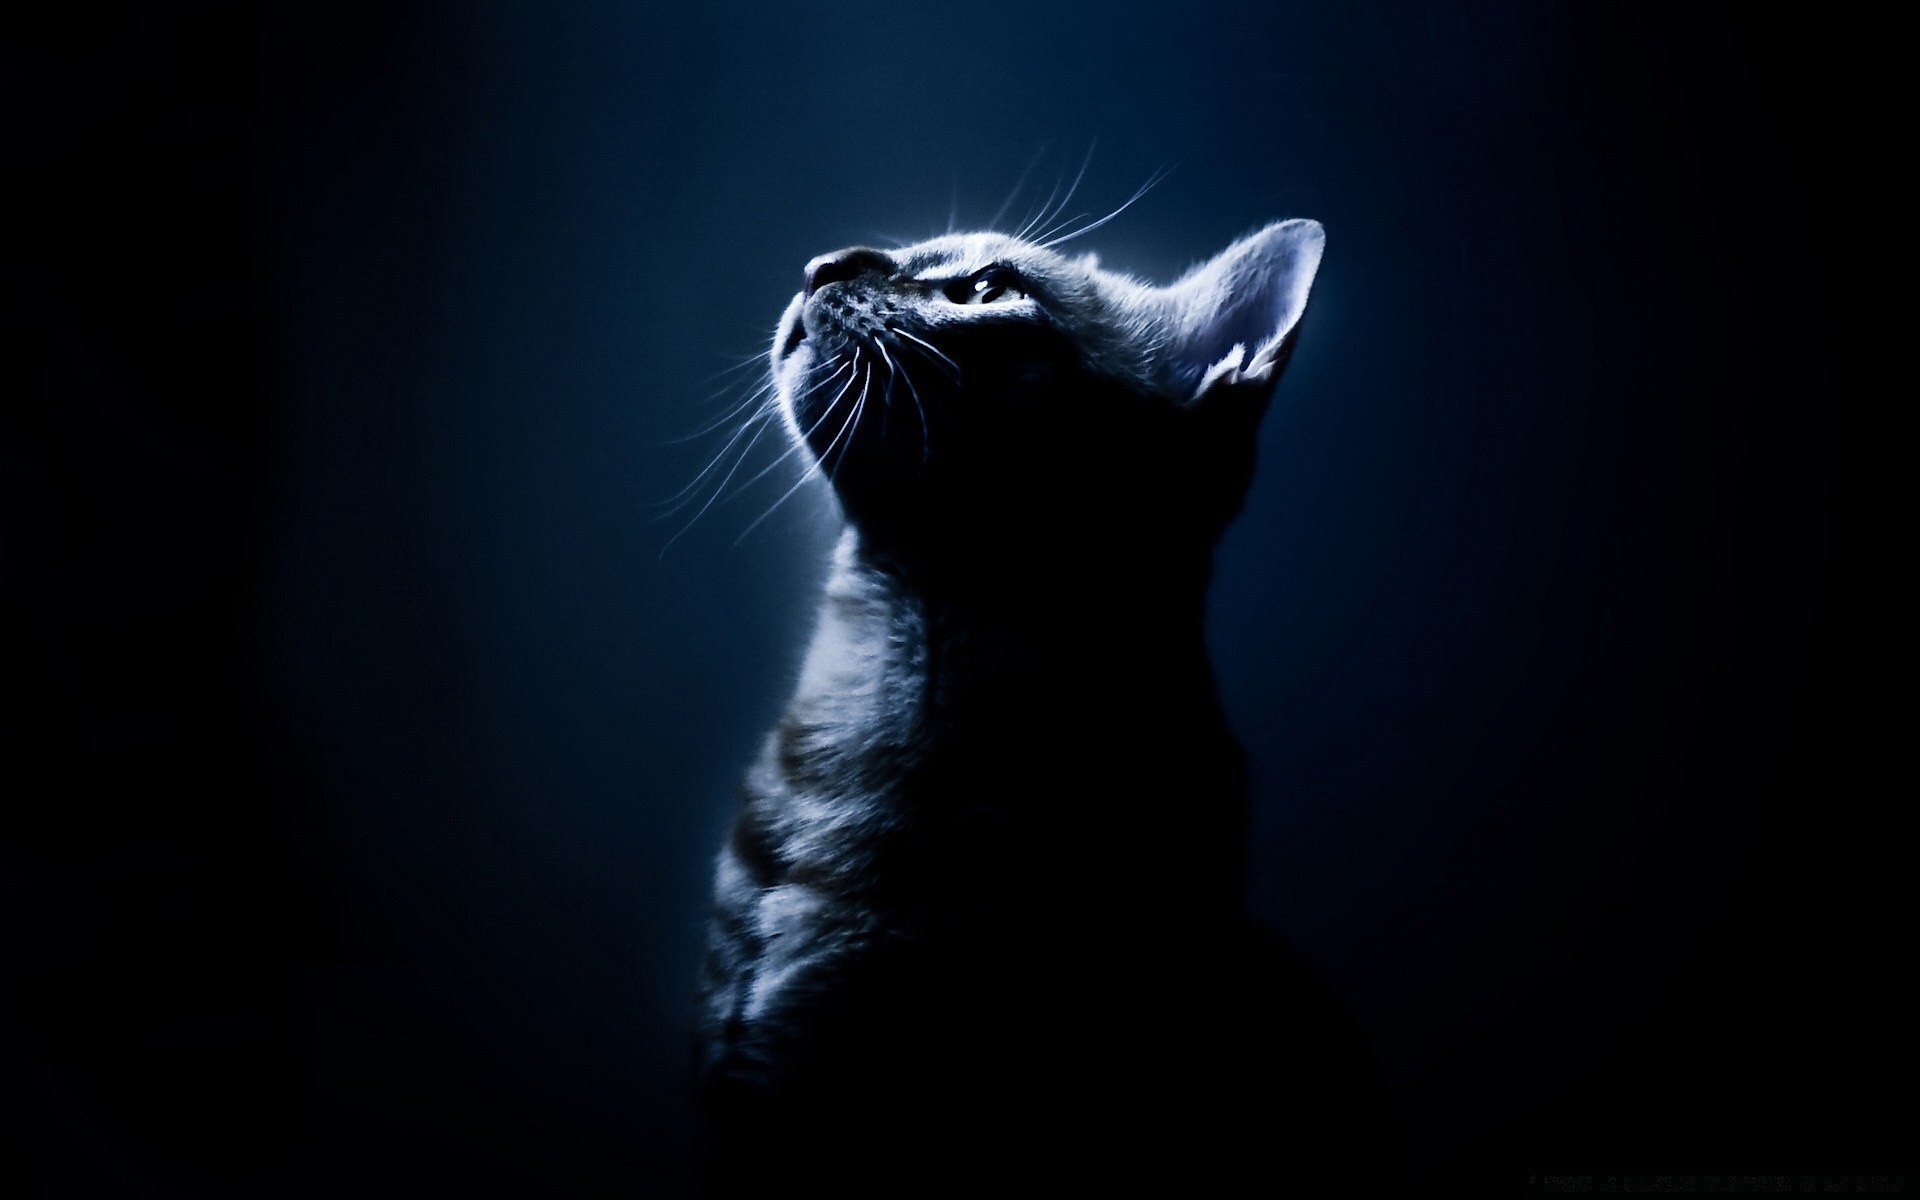 cats cat dark art mammal portrait cute light animal shadow